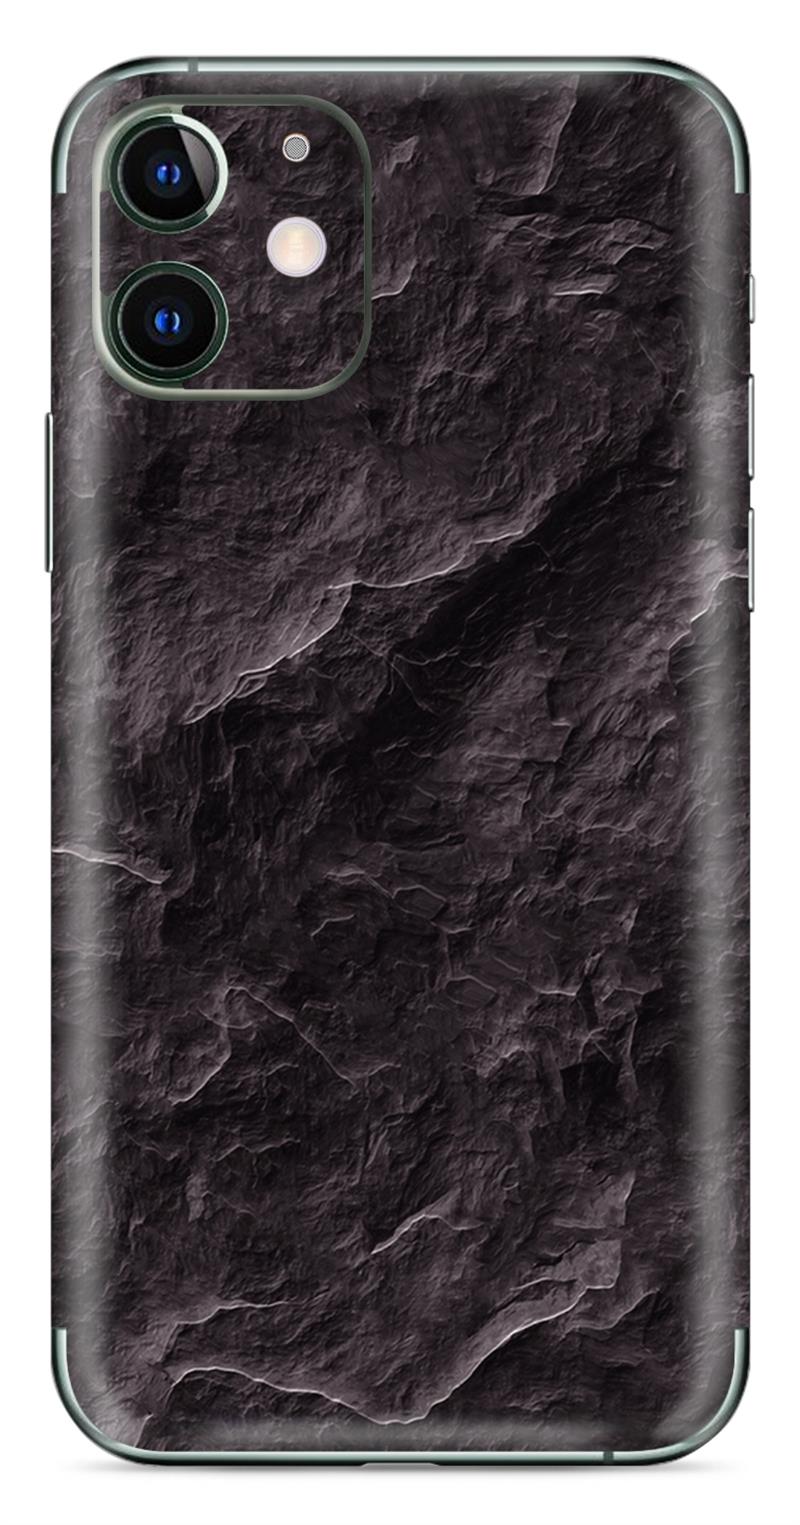 My Style PhoneSkin For Apple iPhone 11 Black Rock